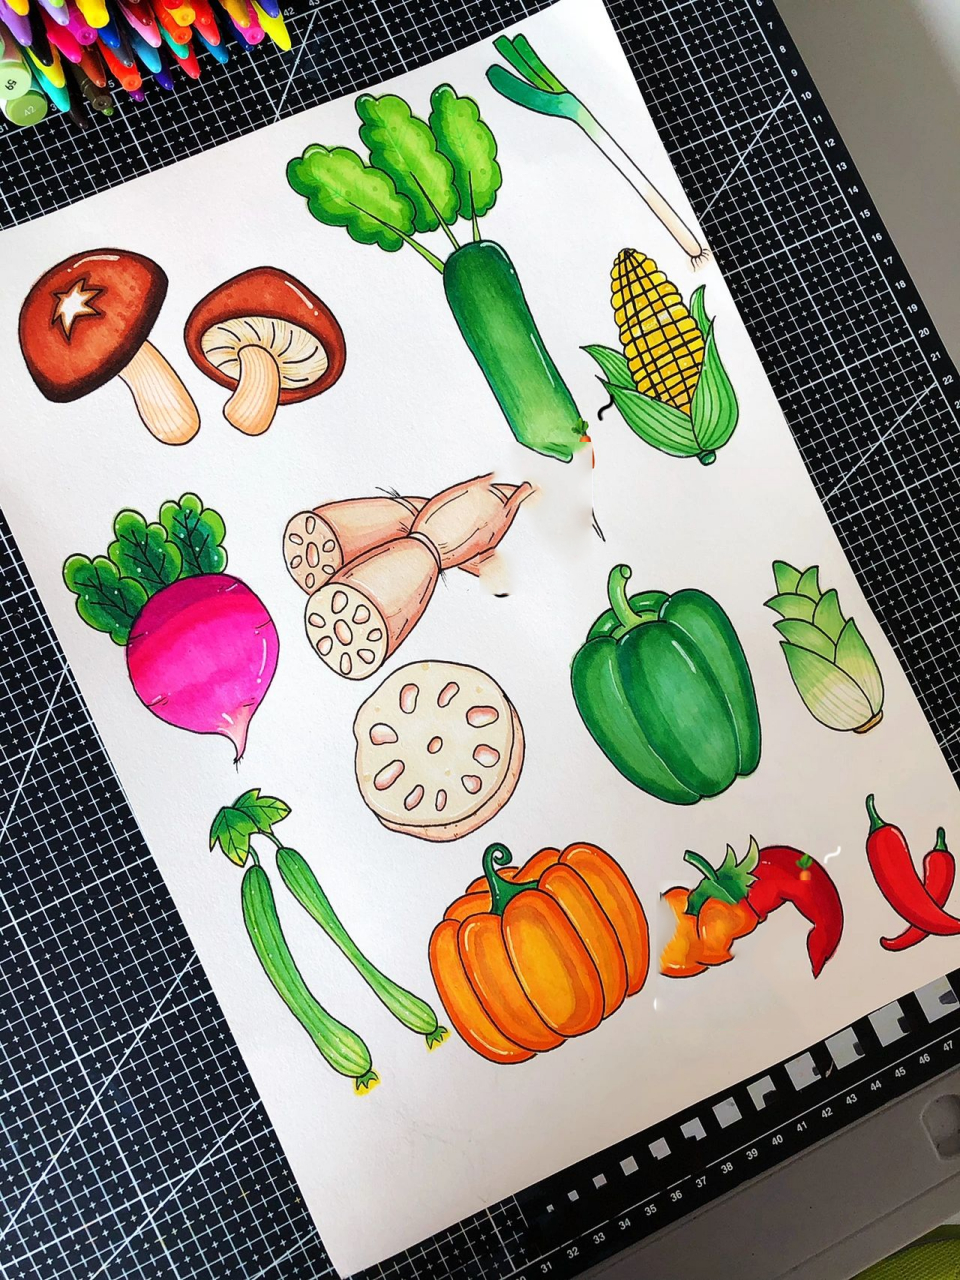 vegetables的简笔画图片